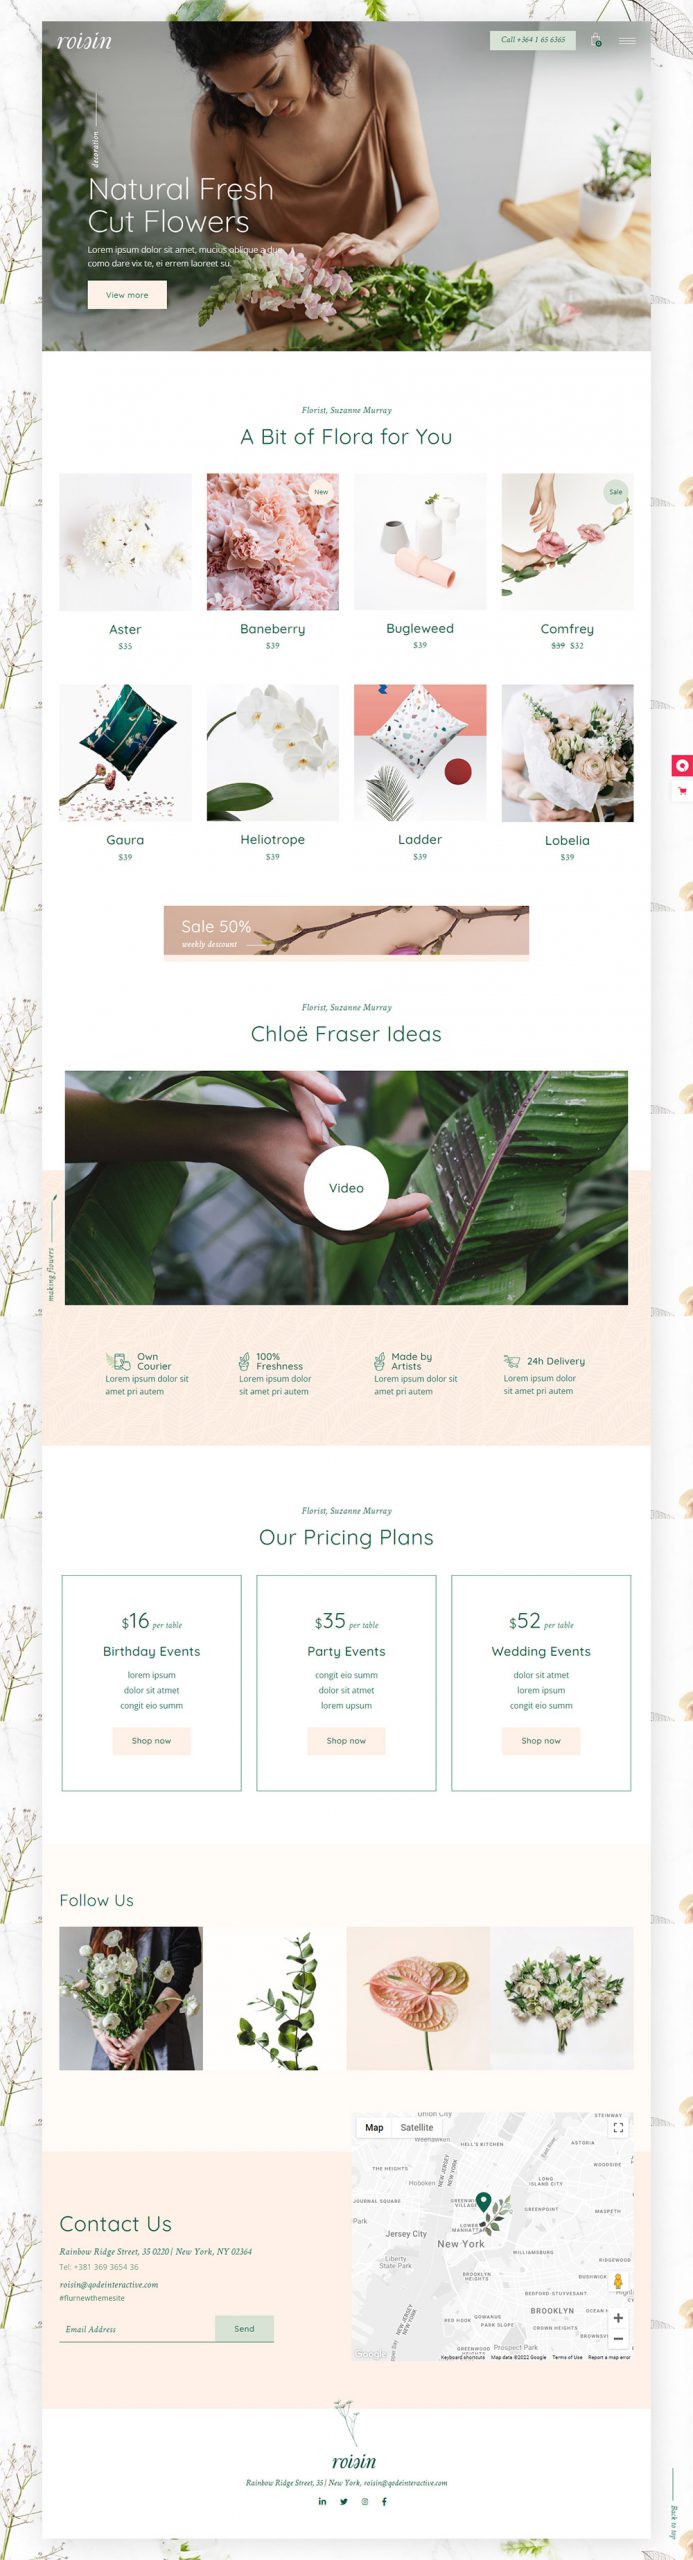 Website shop hoa TMI_FlowerShop_10030